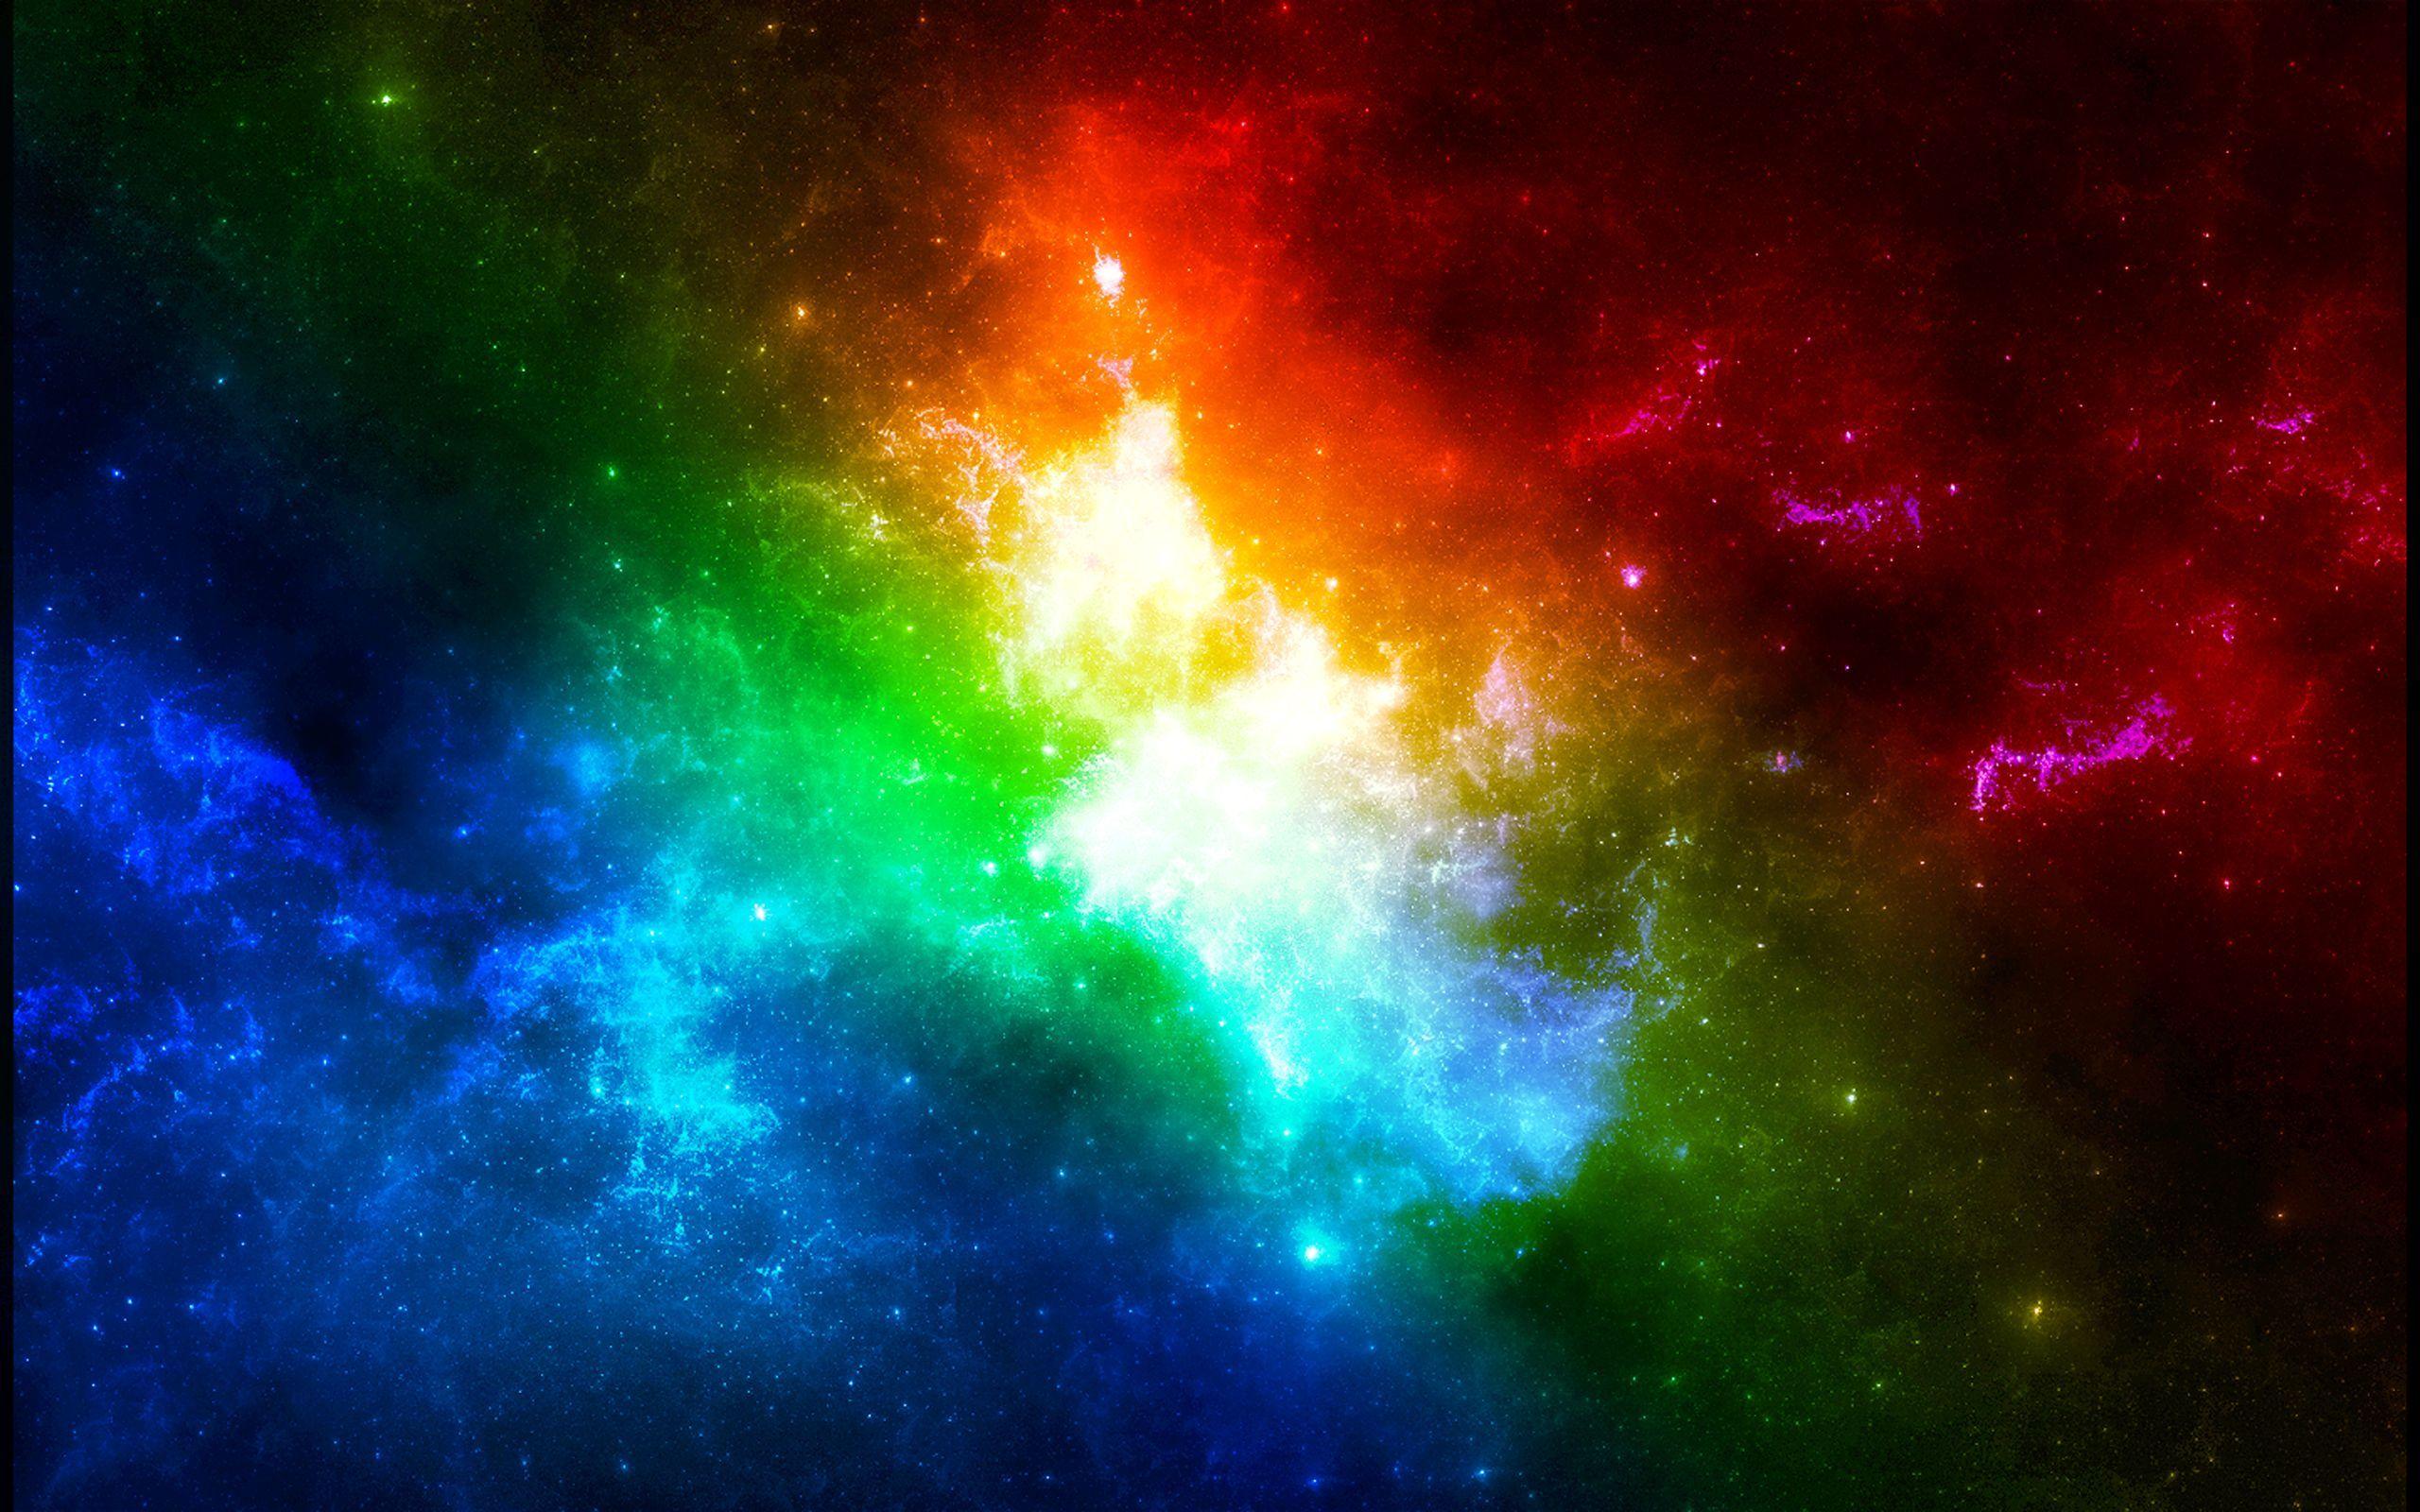 Free Colorful Galaxy Wallpaper Full HD. Galaxy wallpaper